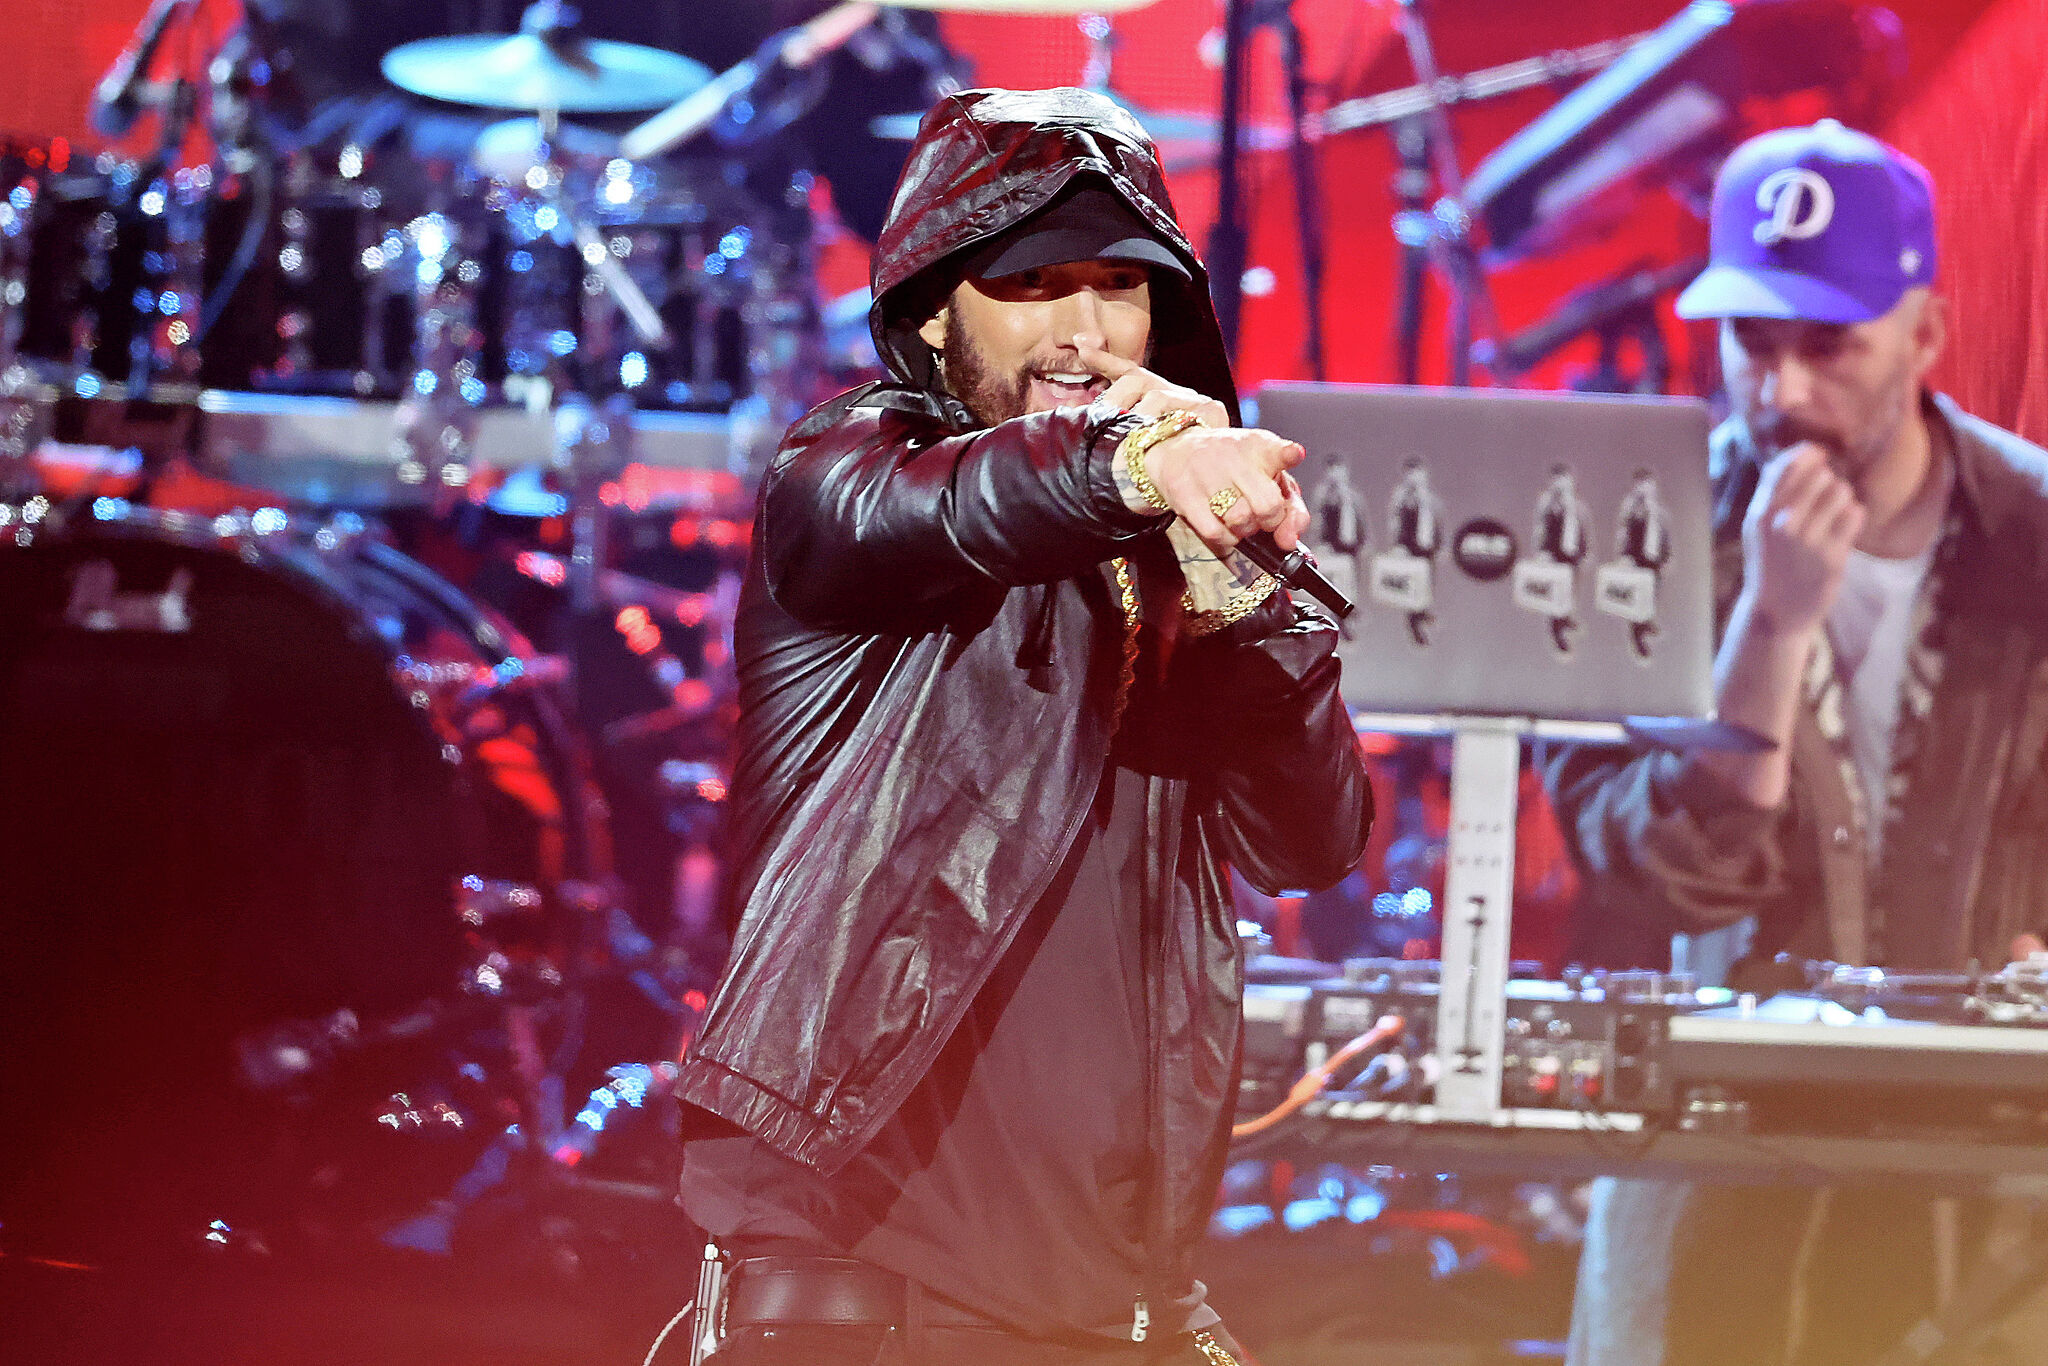 Eminem, the world's fastest rapper, lands another 1 billion stream hit